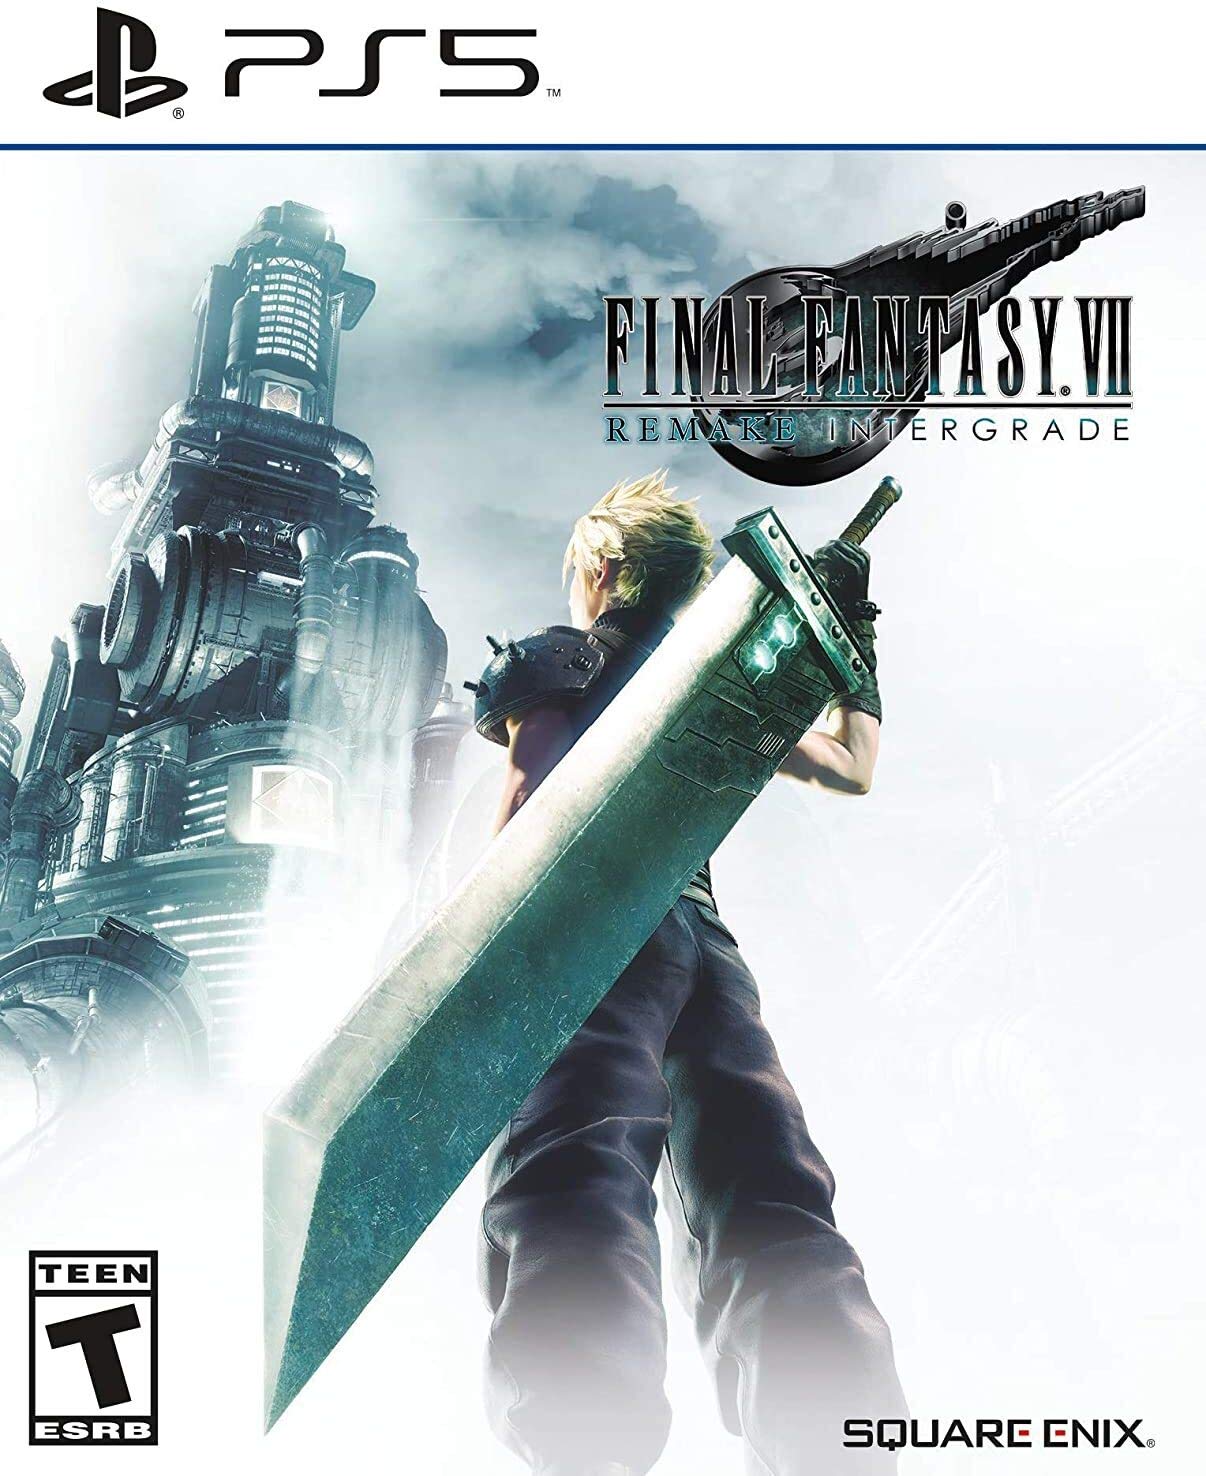 Final Fantasy VII Remake: Intergrade (PS5) - Pre-Owned $12.84 - GamerCandy | eBay